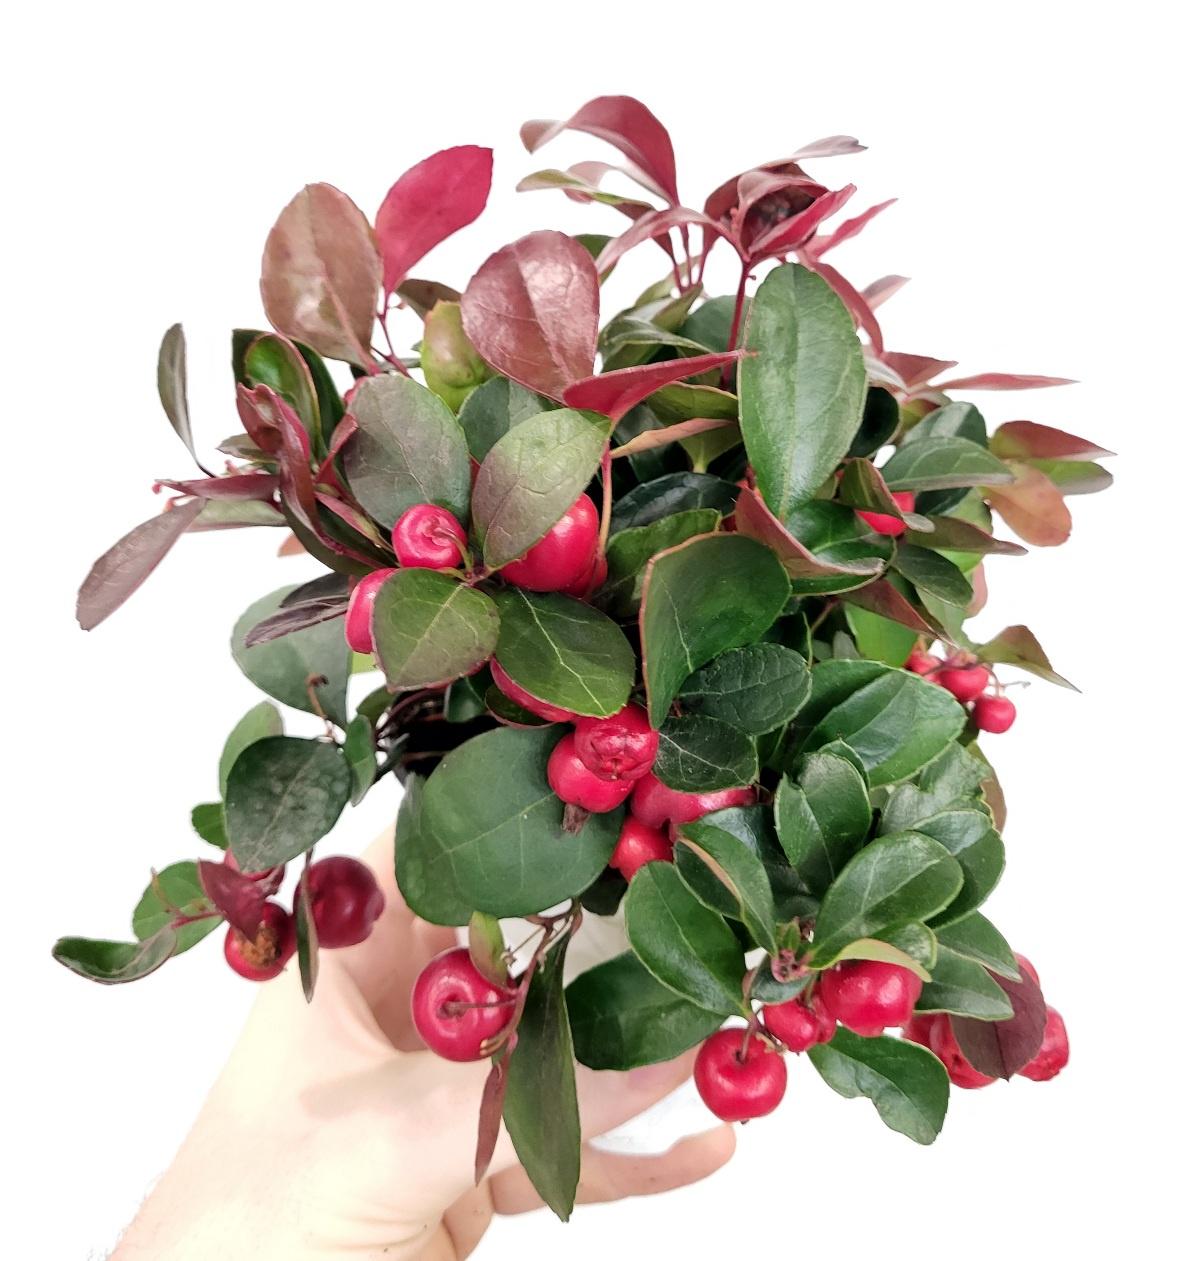 Gaultheria procumbens - Wintergreen